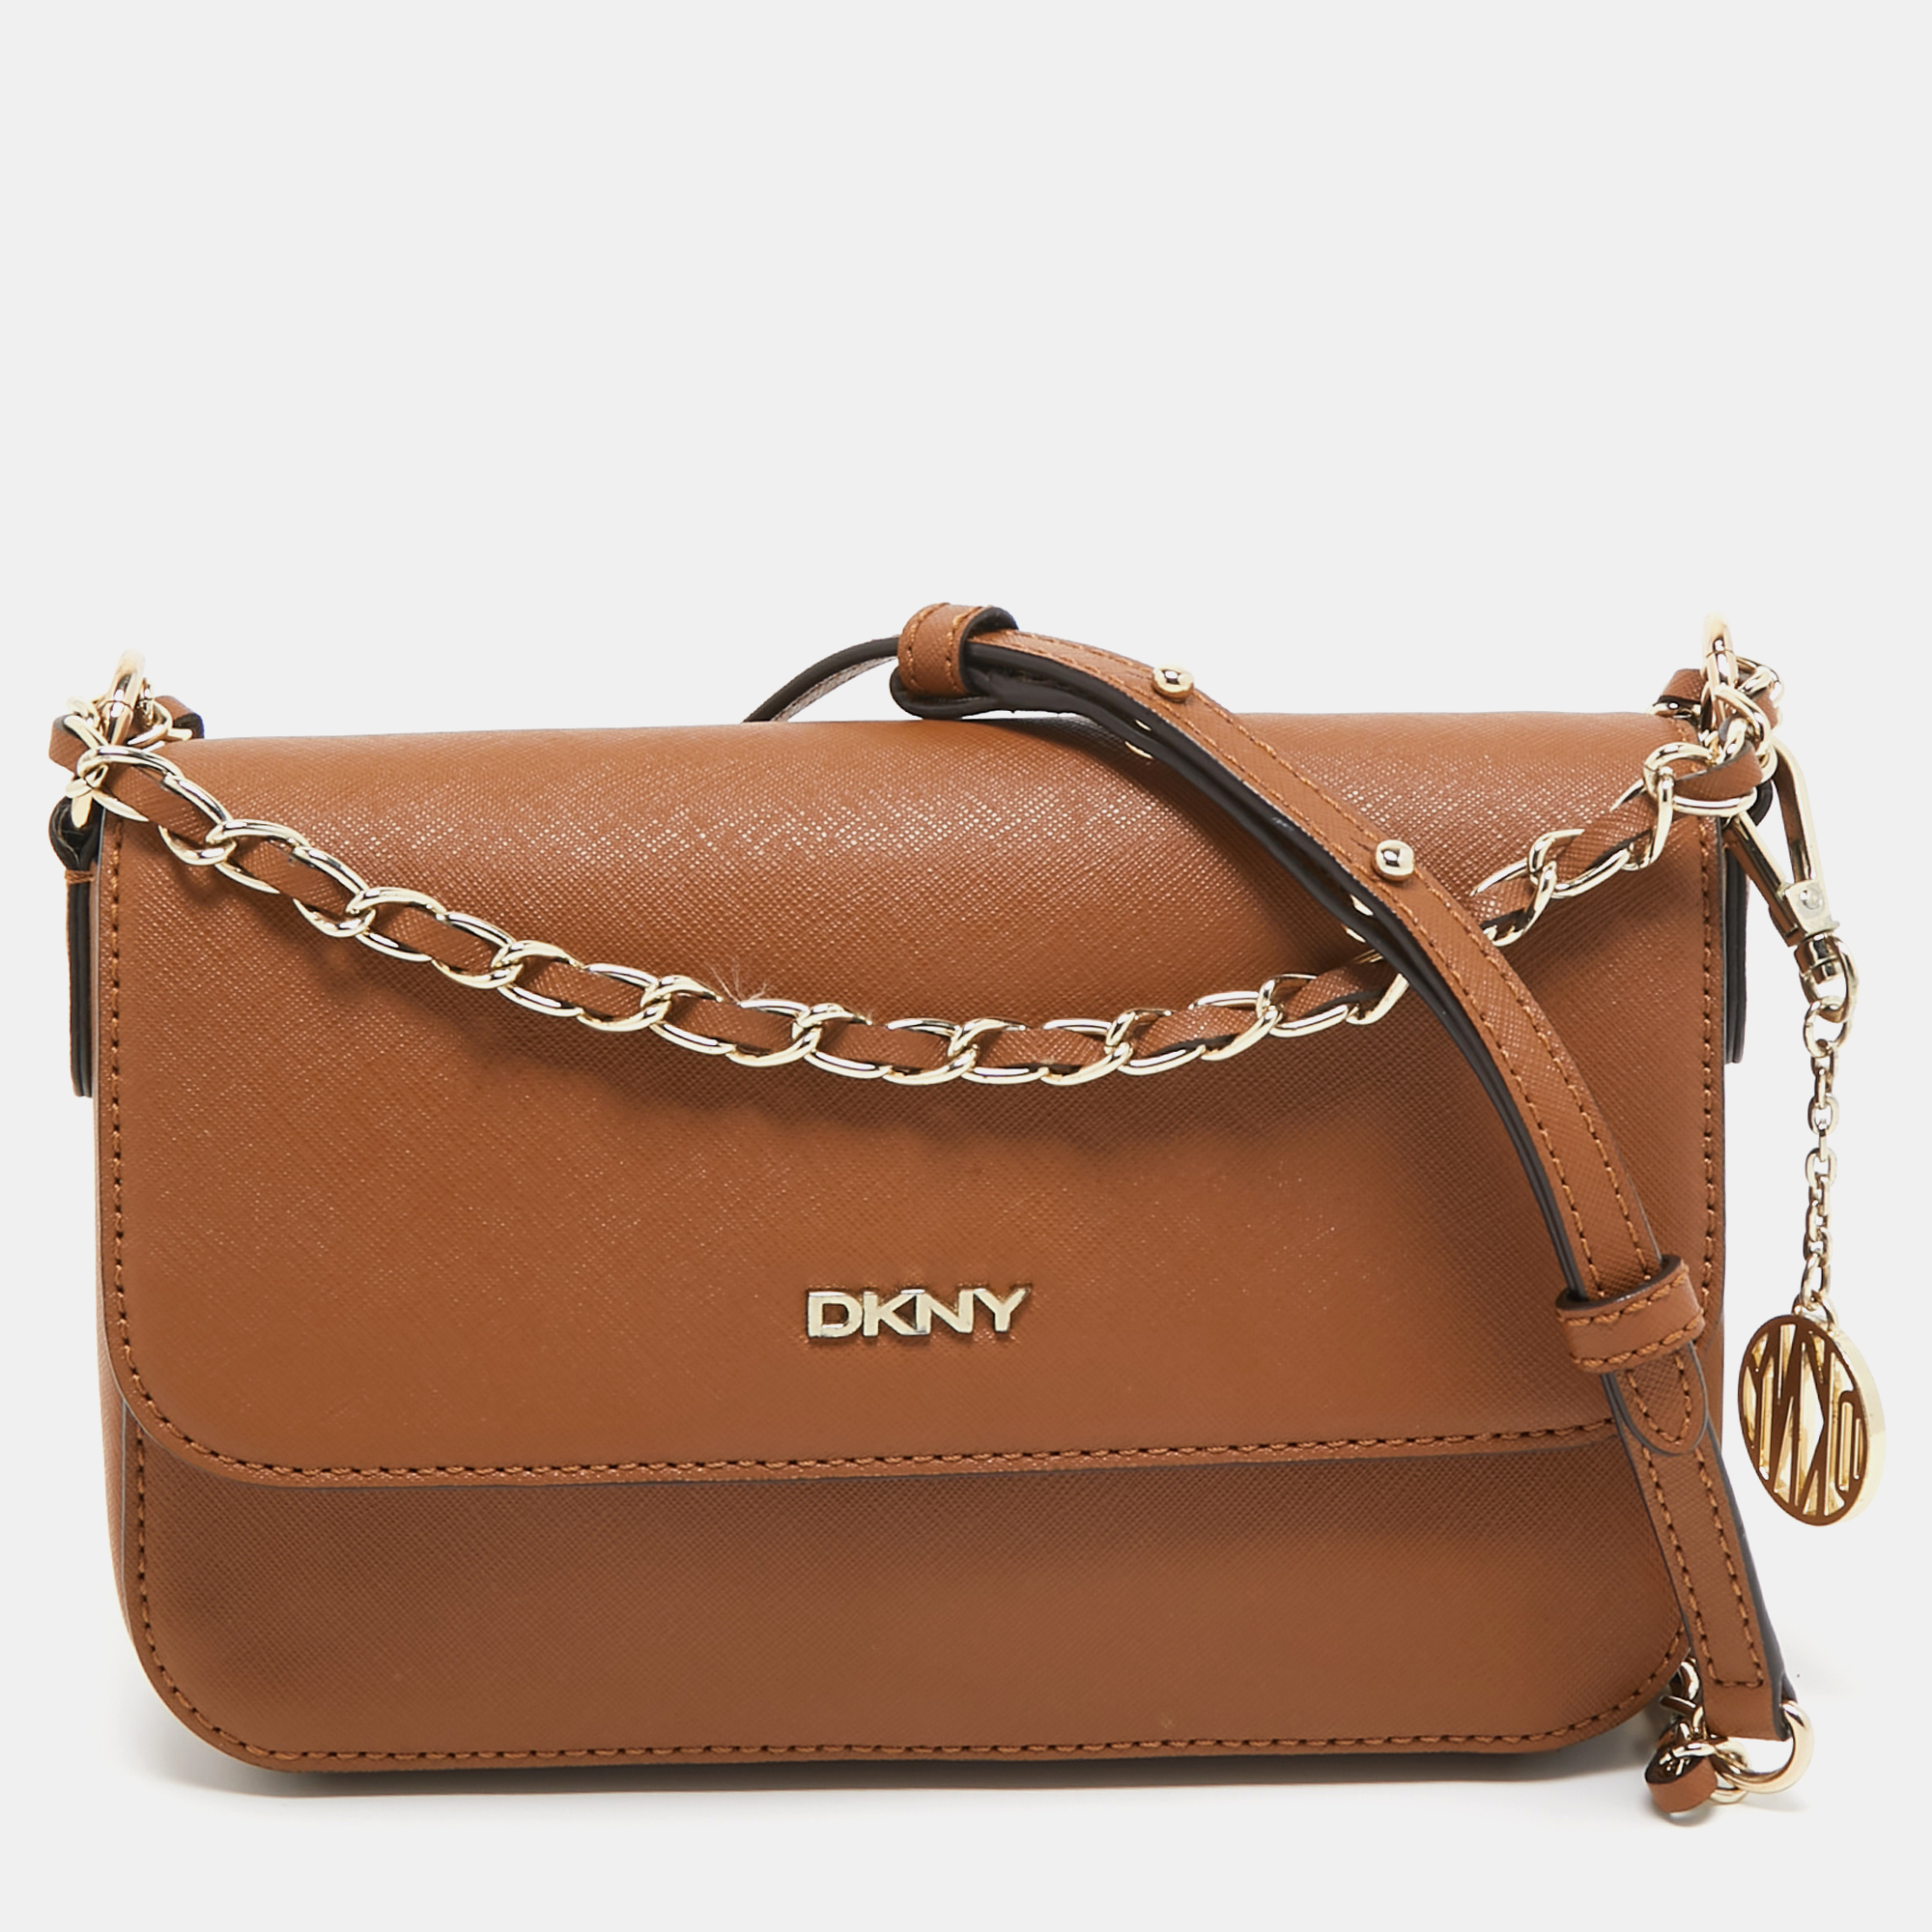 Dkny brown leather bryant flap crossbody bag